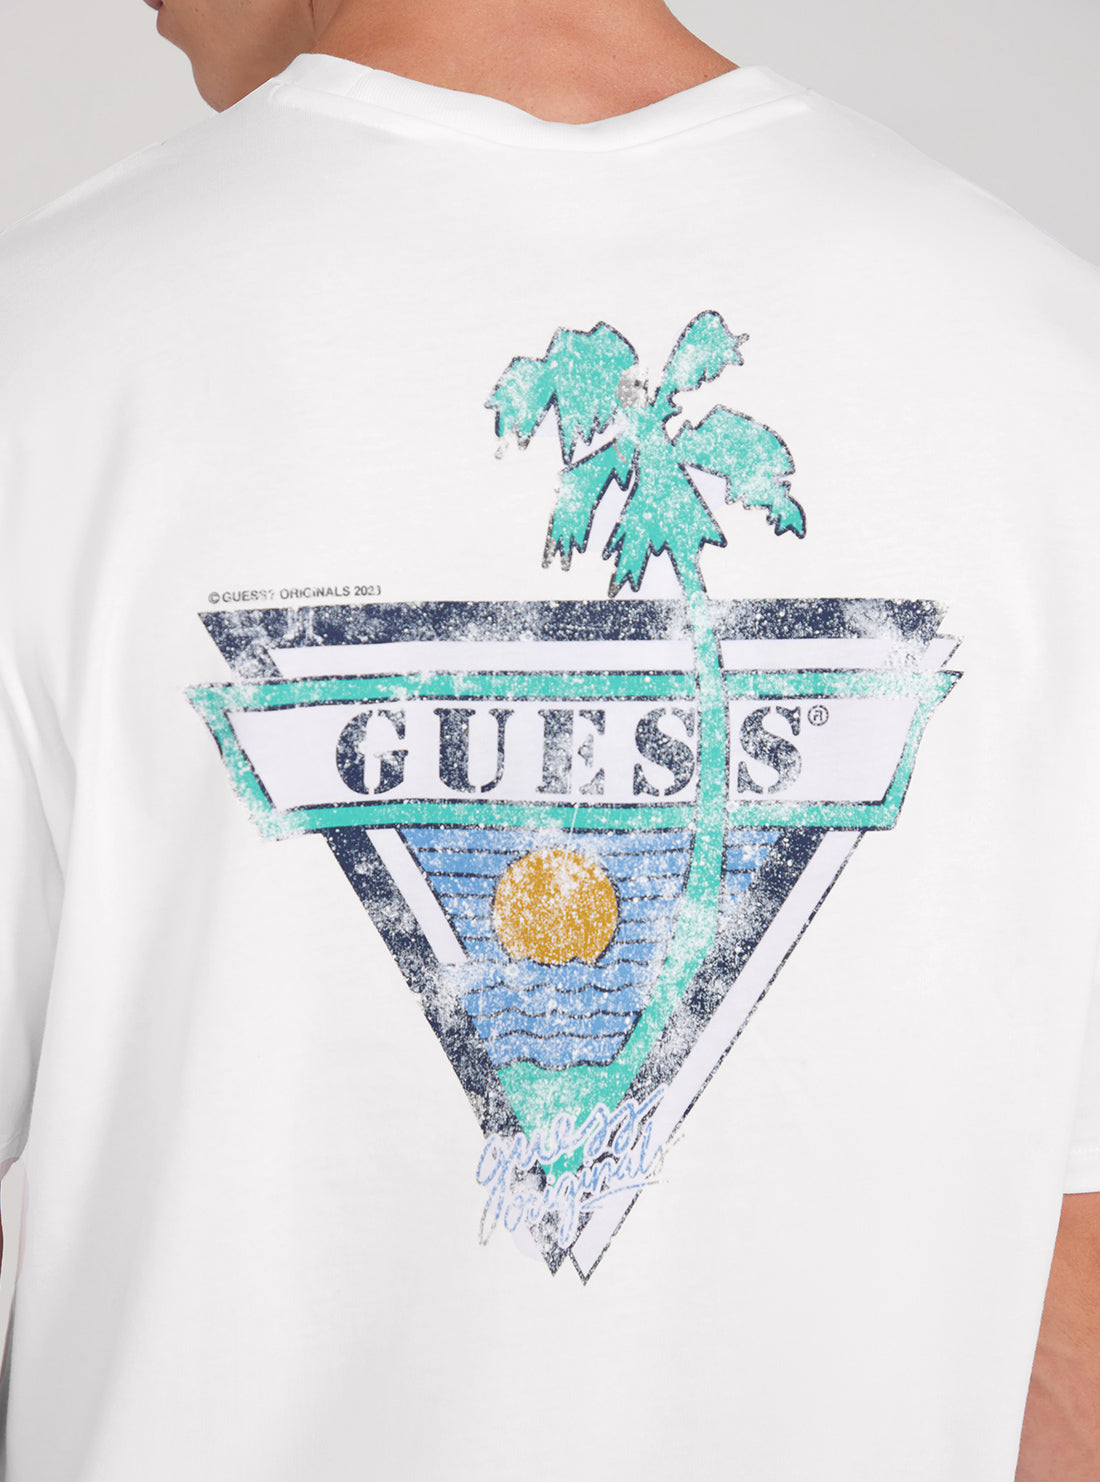 Guess Originals White Palms T-Shirt detail view